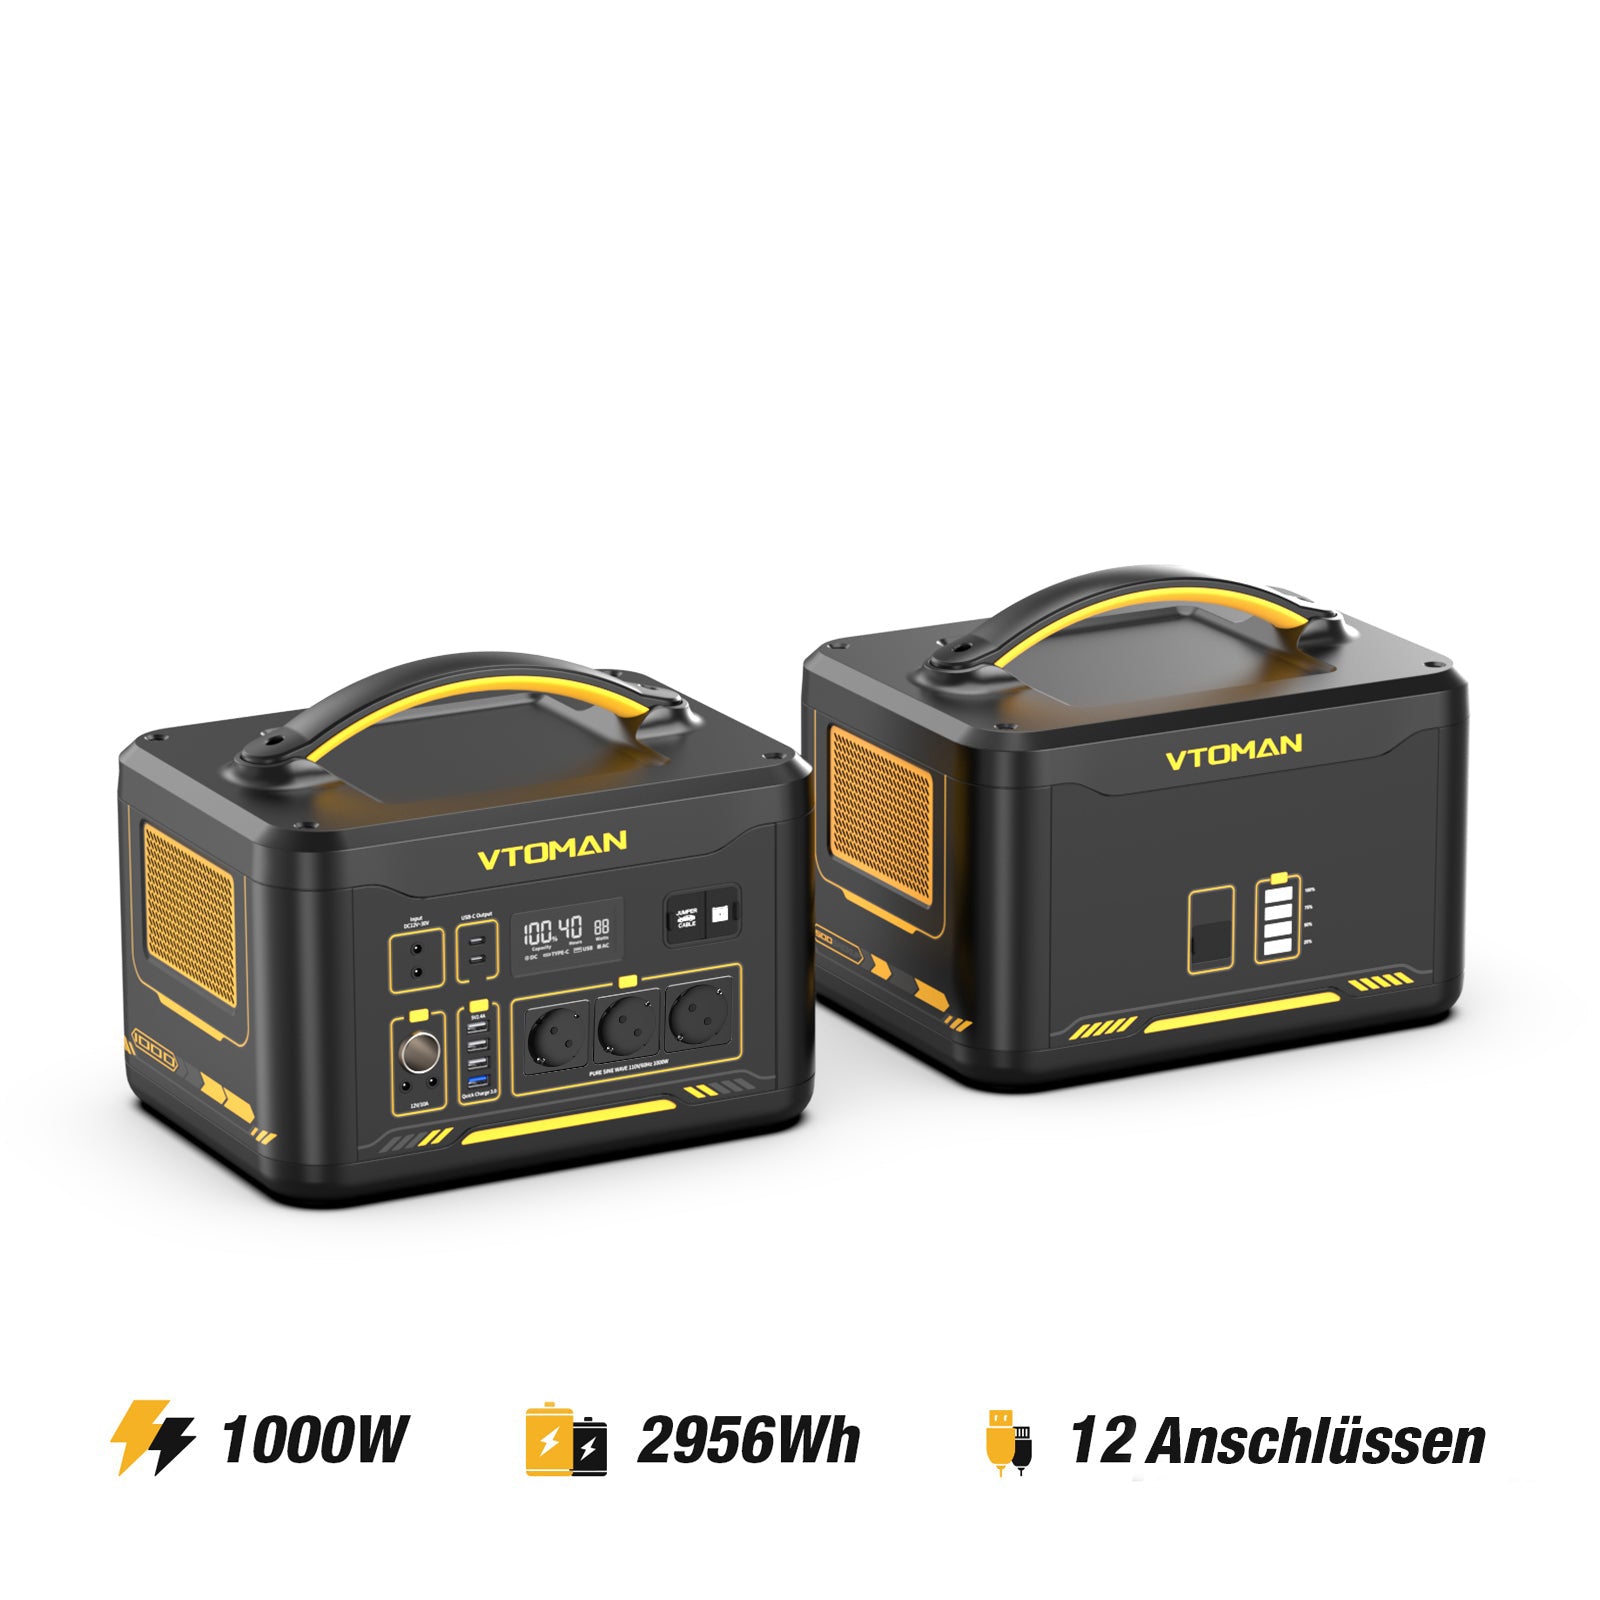 VTOMAN Jump 1548Wh Zusatzbatterie